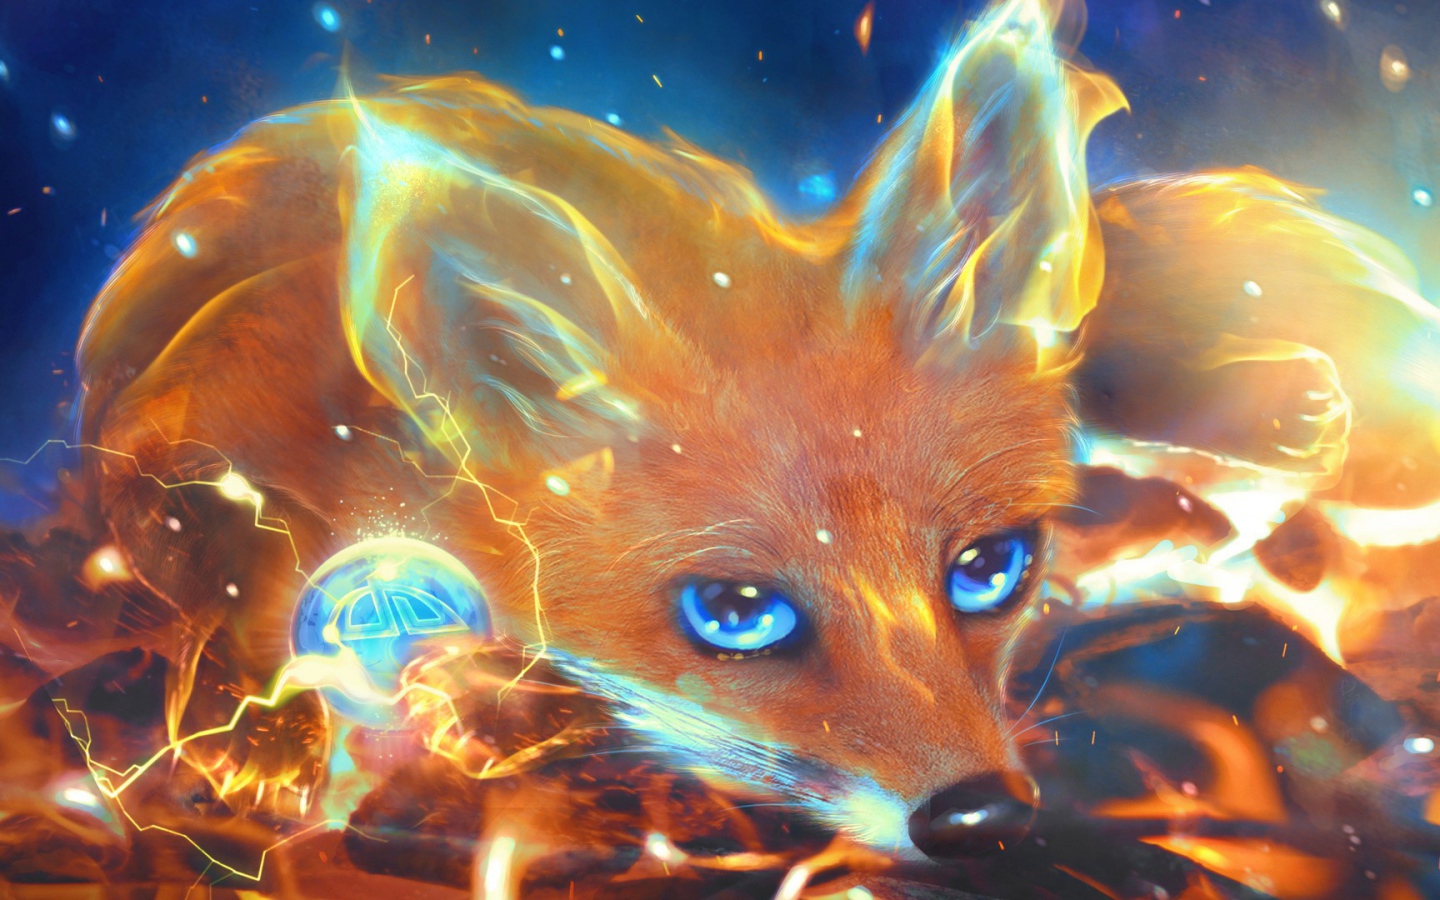 Celestial fox